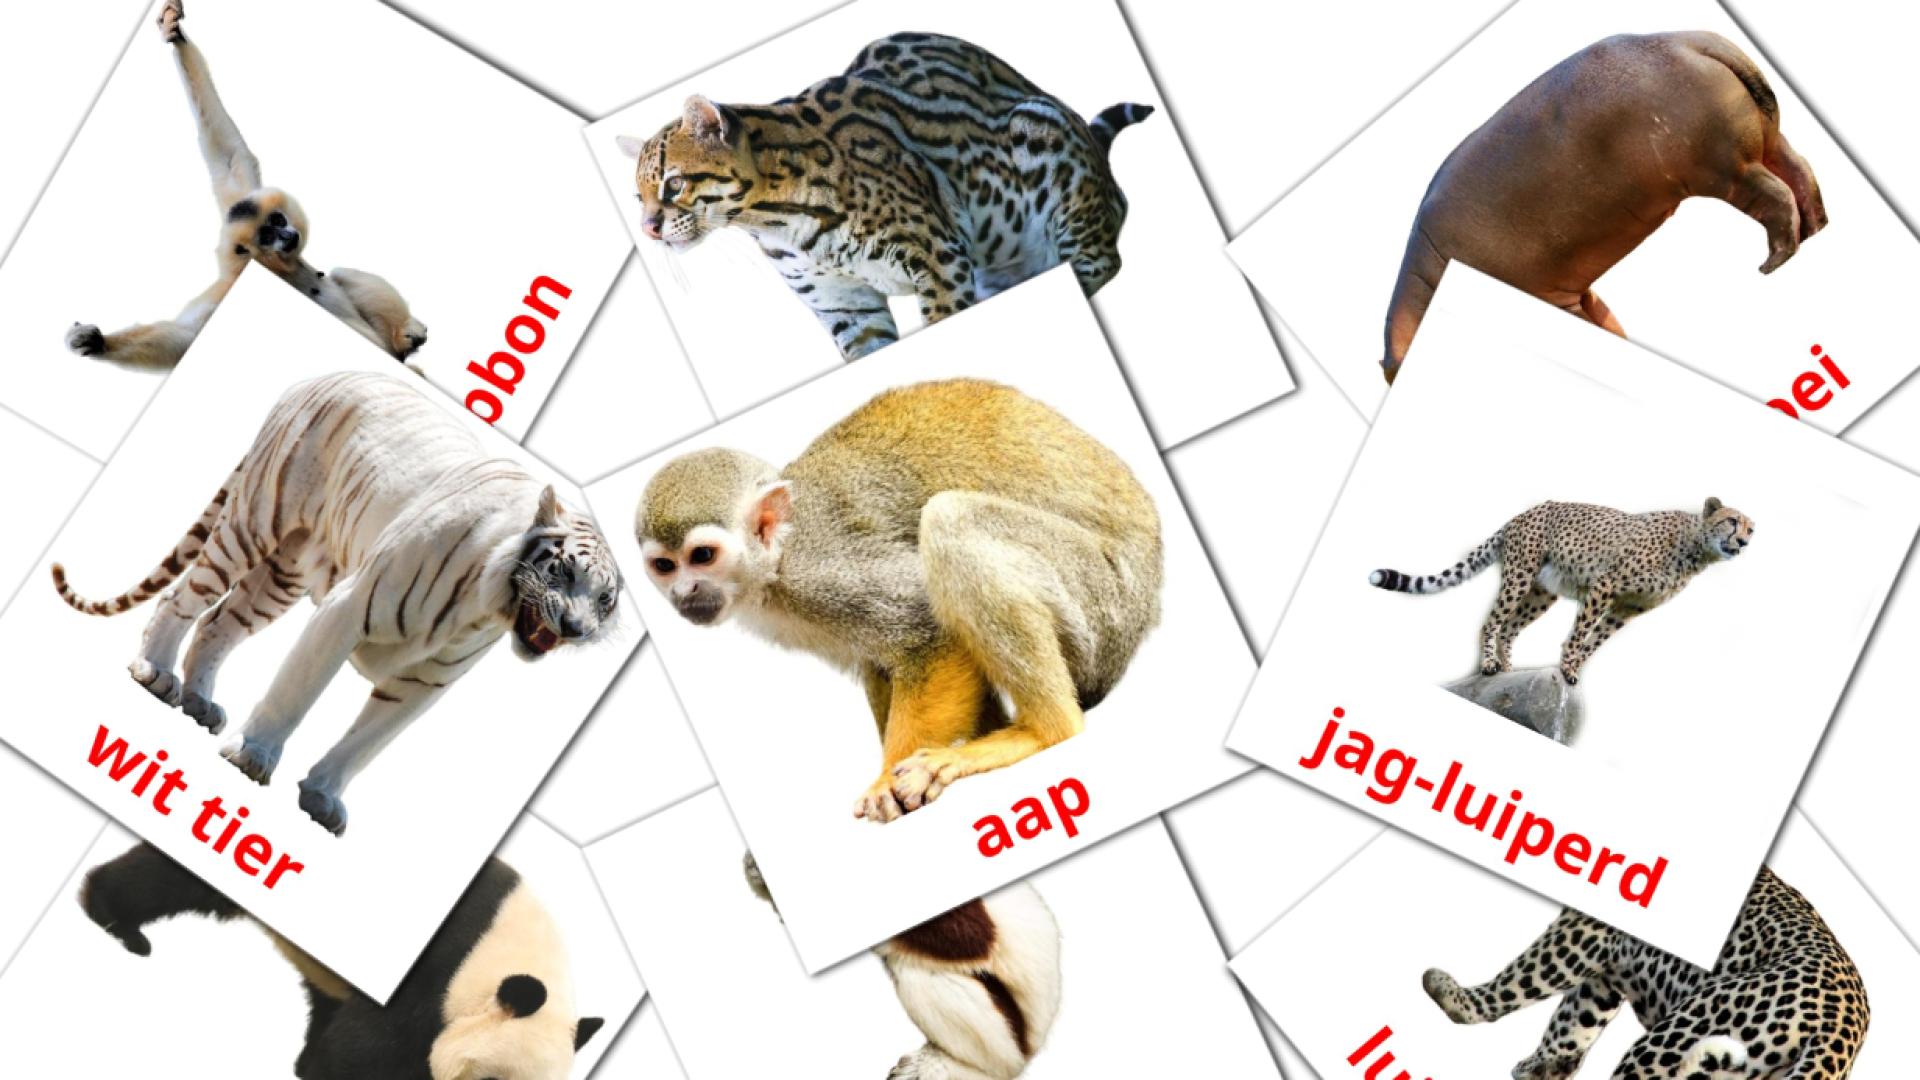 Jungle animals - afrikaans vocabulary cards